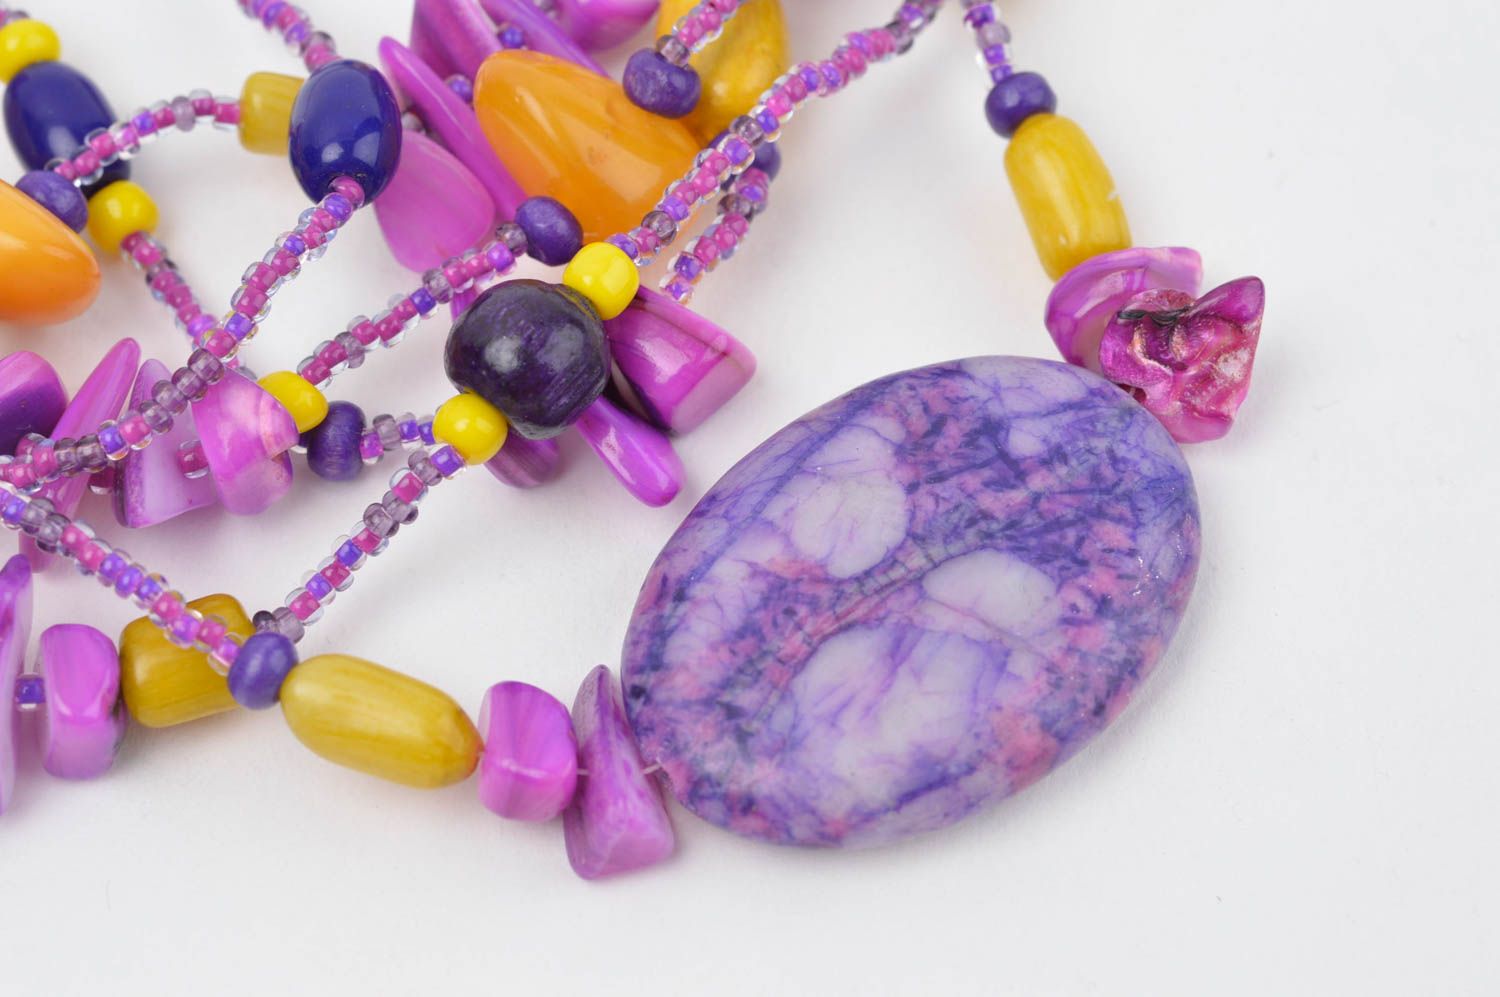 Handmade bead necklace for women gift ideas unusual accessory designer jewelry photo 4